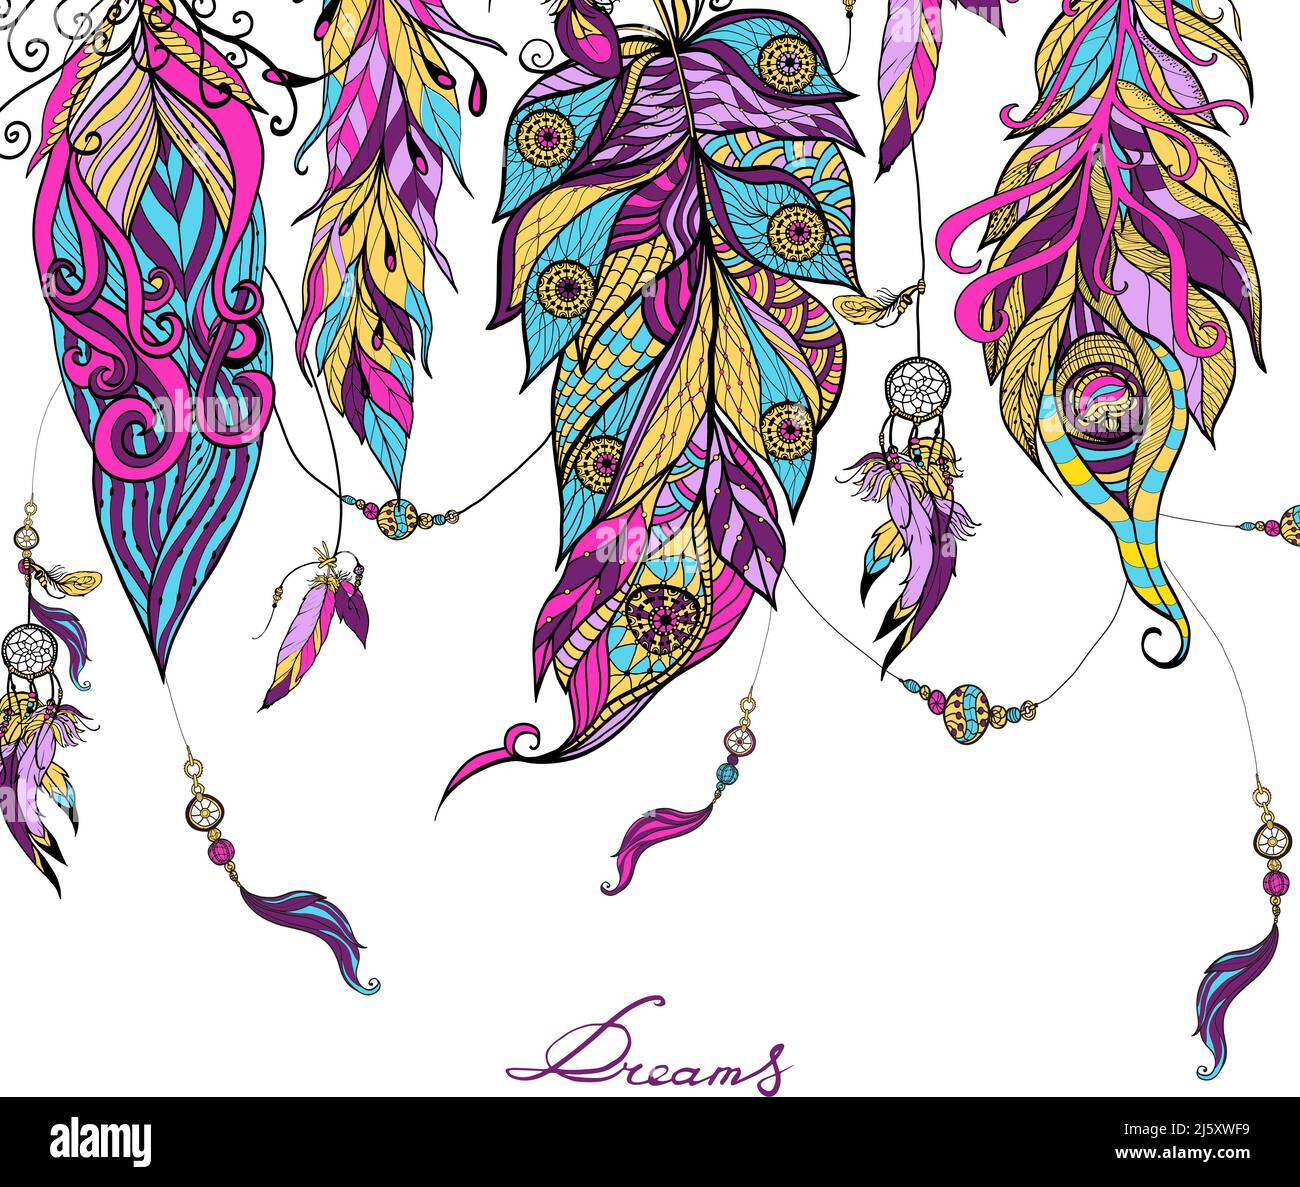 Ethnische Traumfänger Federn mit Skizze abstrakt farbigen Ornament Vektor-Illustration Stock Vektor